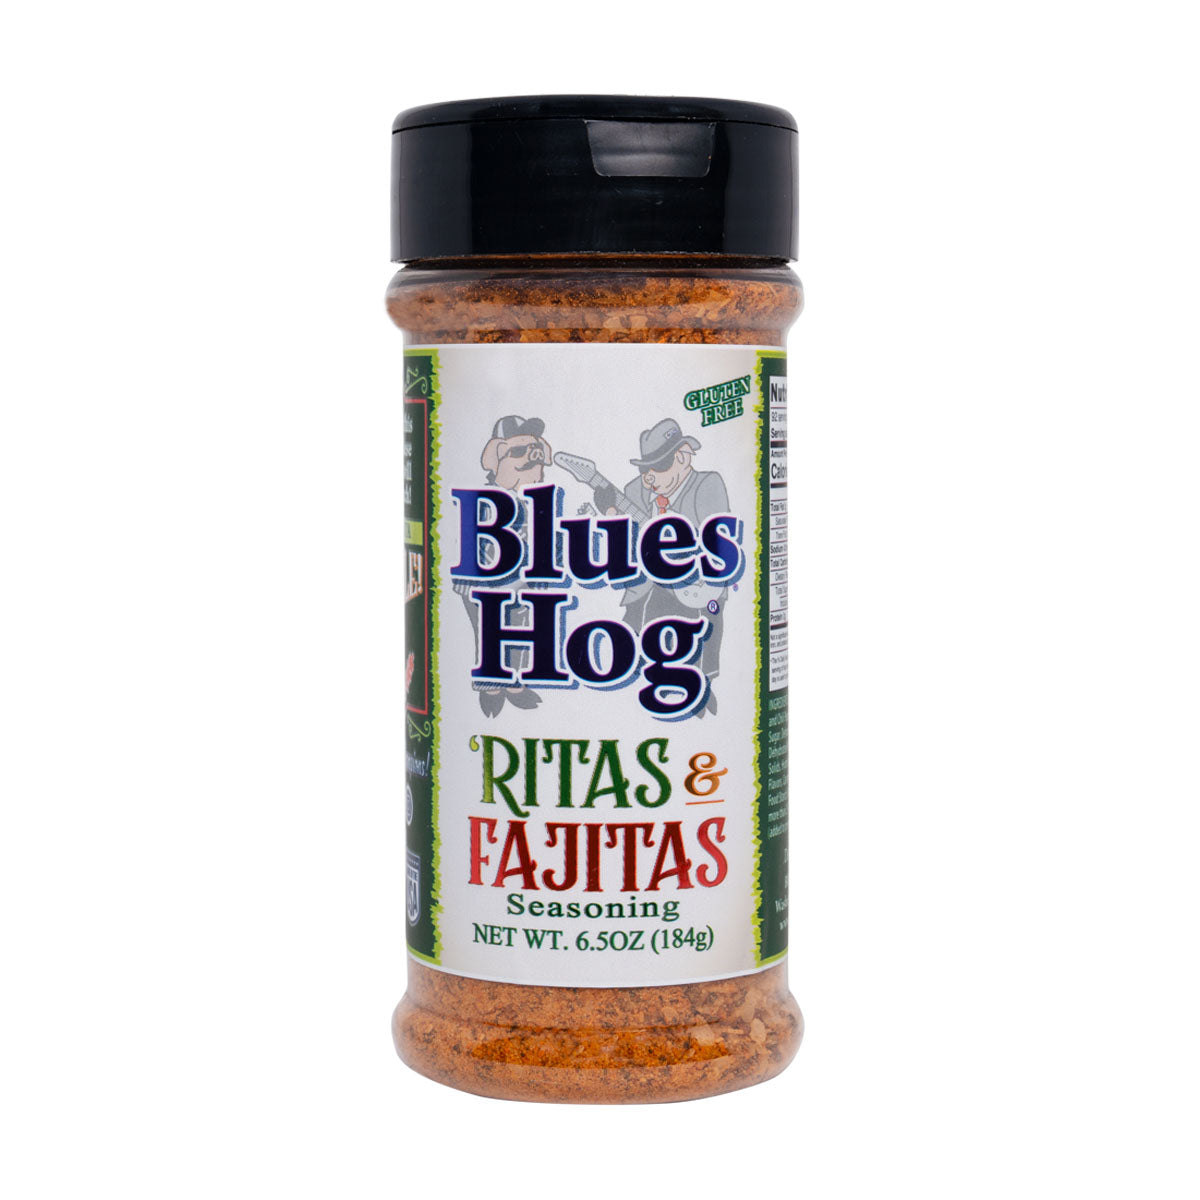 The front of a bottle of Blues Hog 'Ritas & Fajitas Seasoning. 